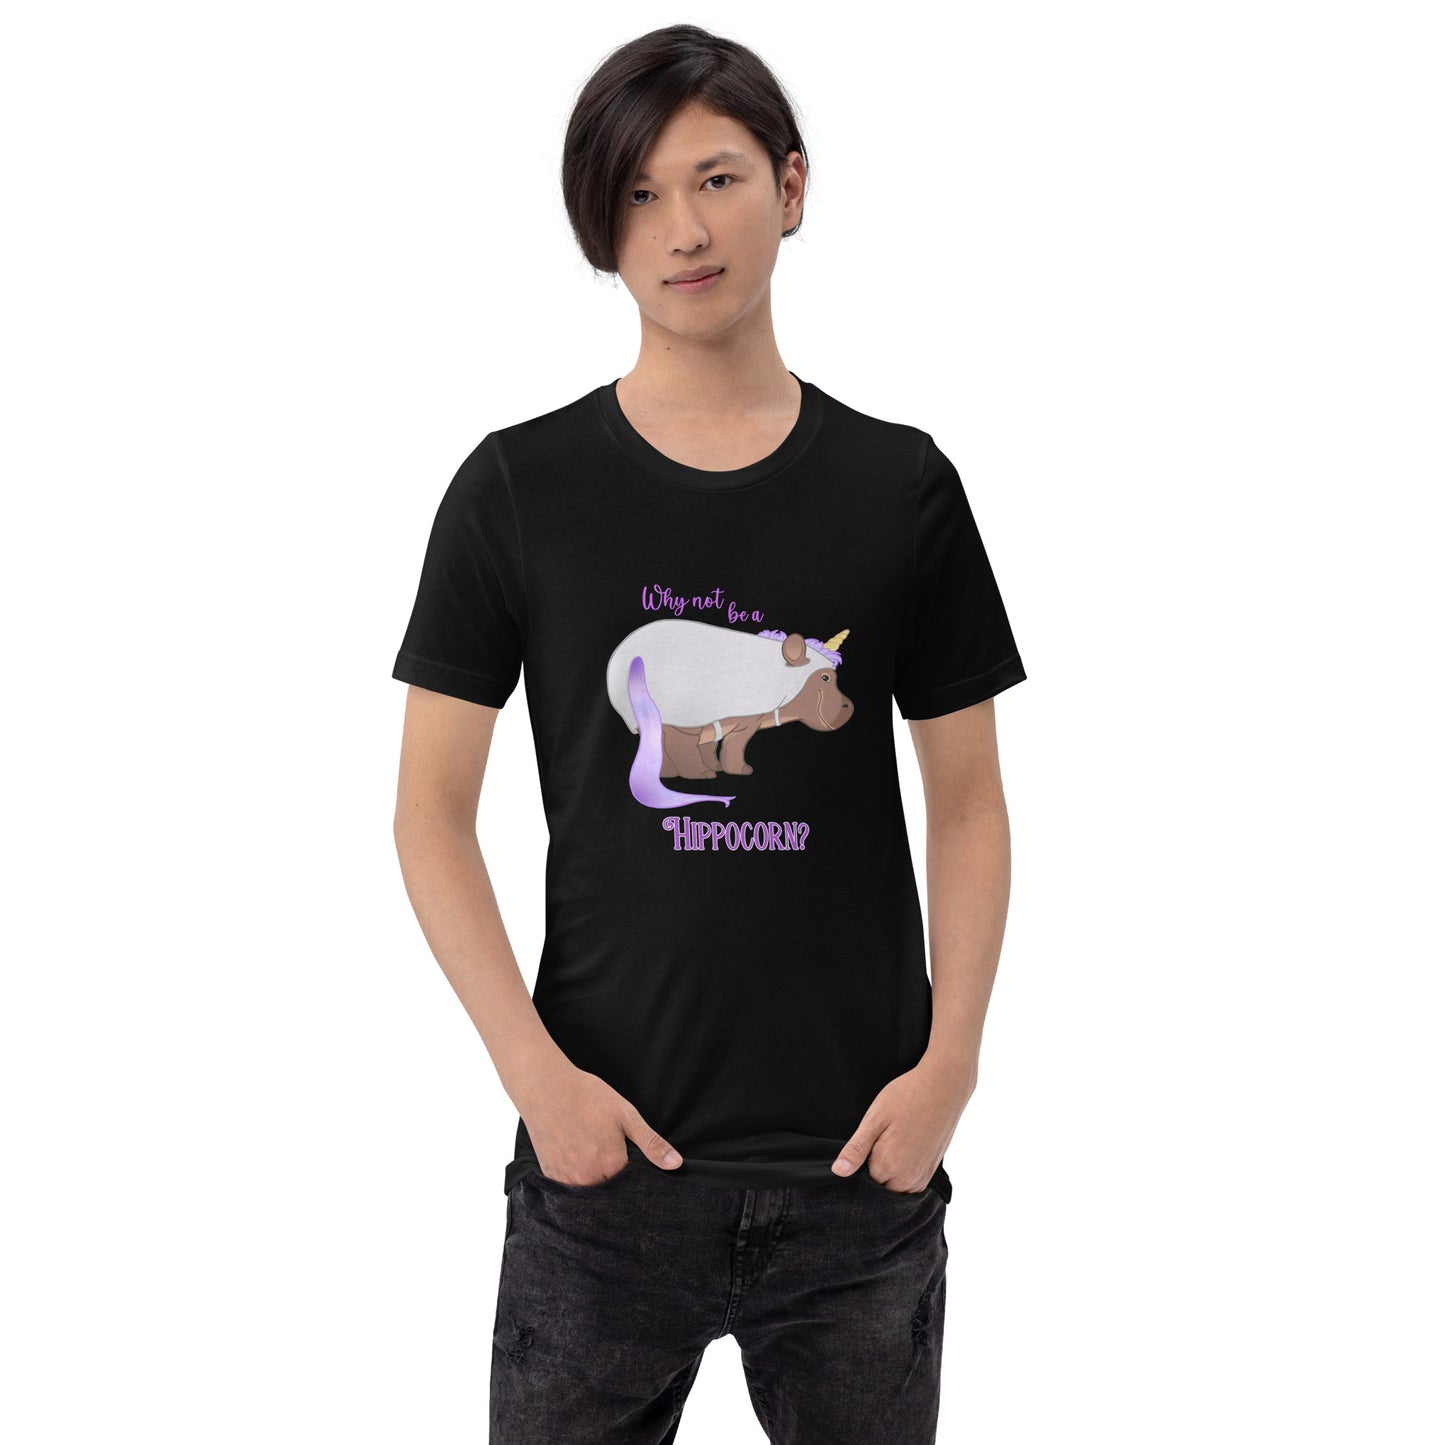 Dash the Hippocorn Unisex T-shirt